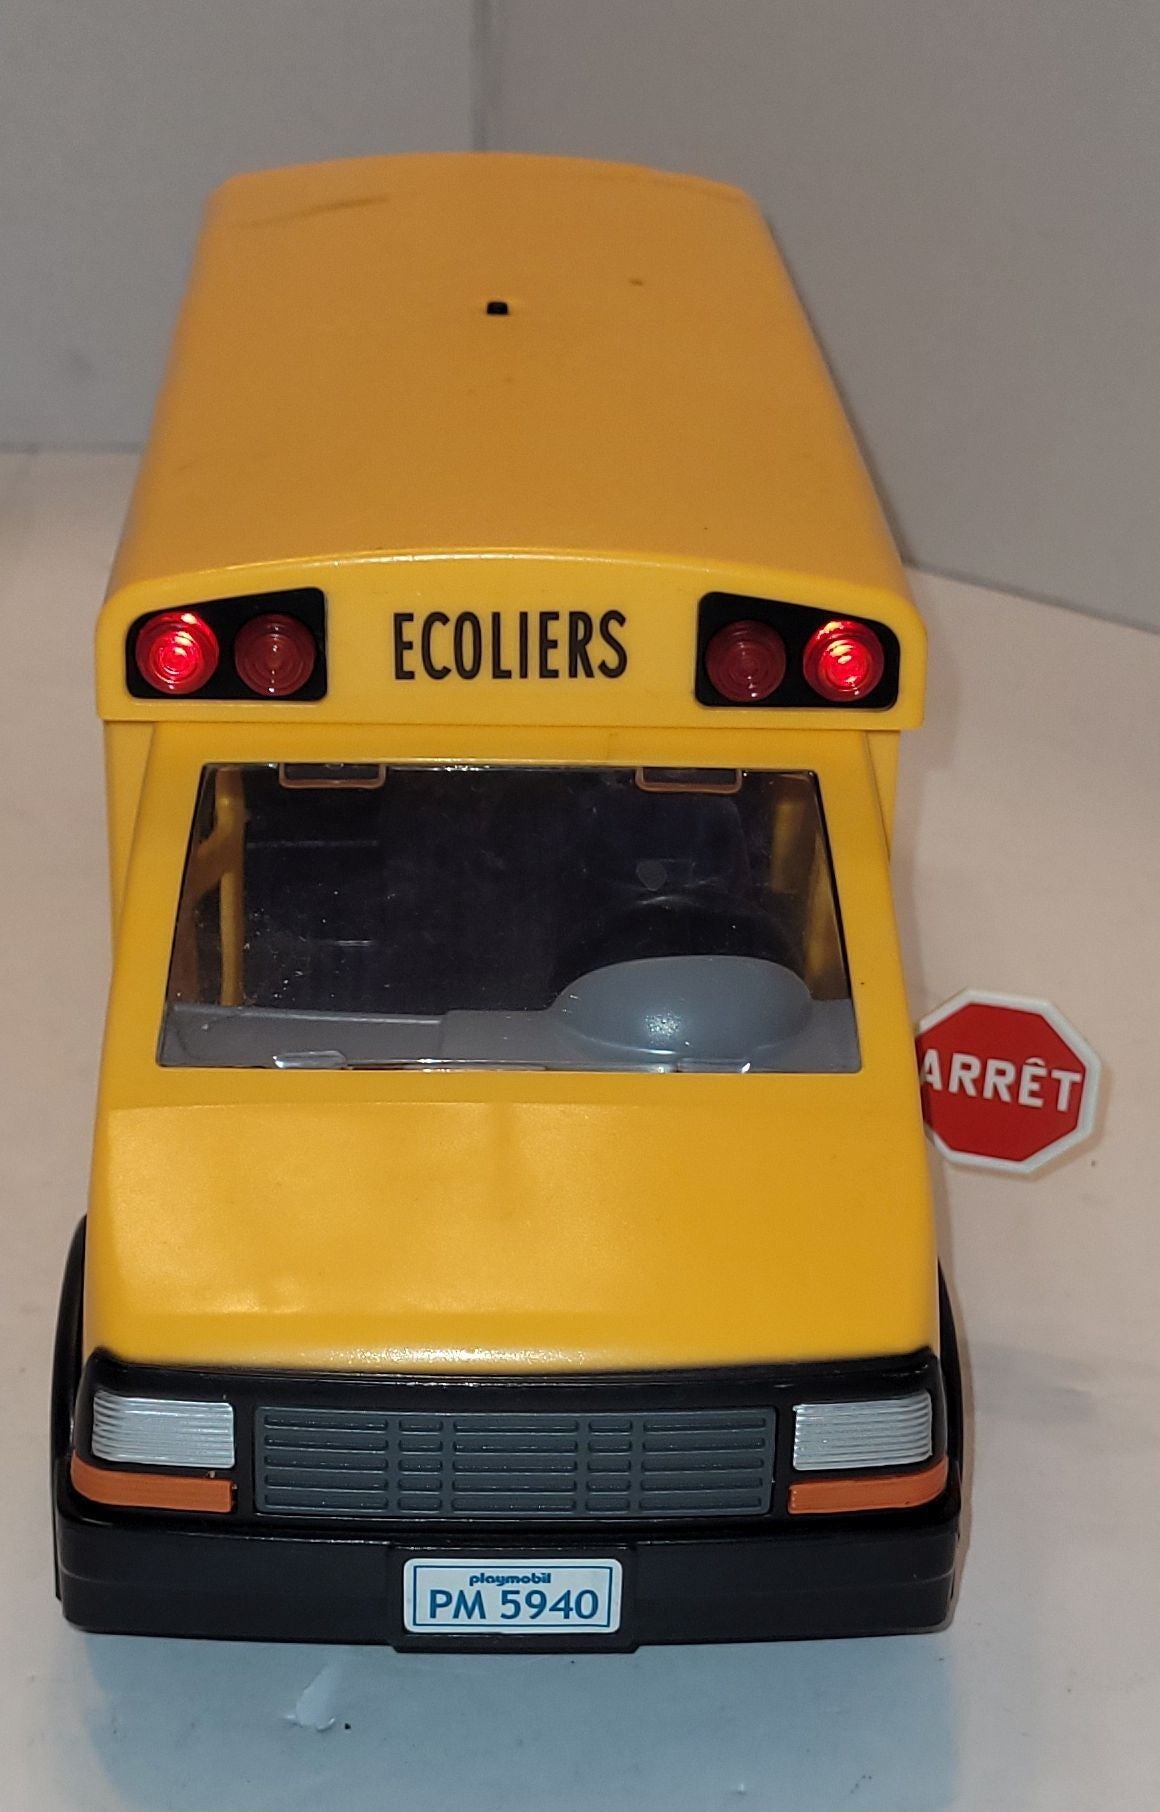 Bus scolaire Playmobil